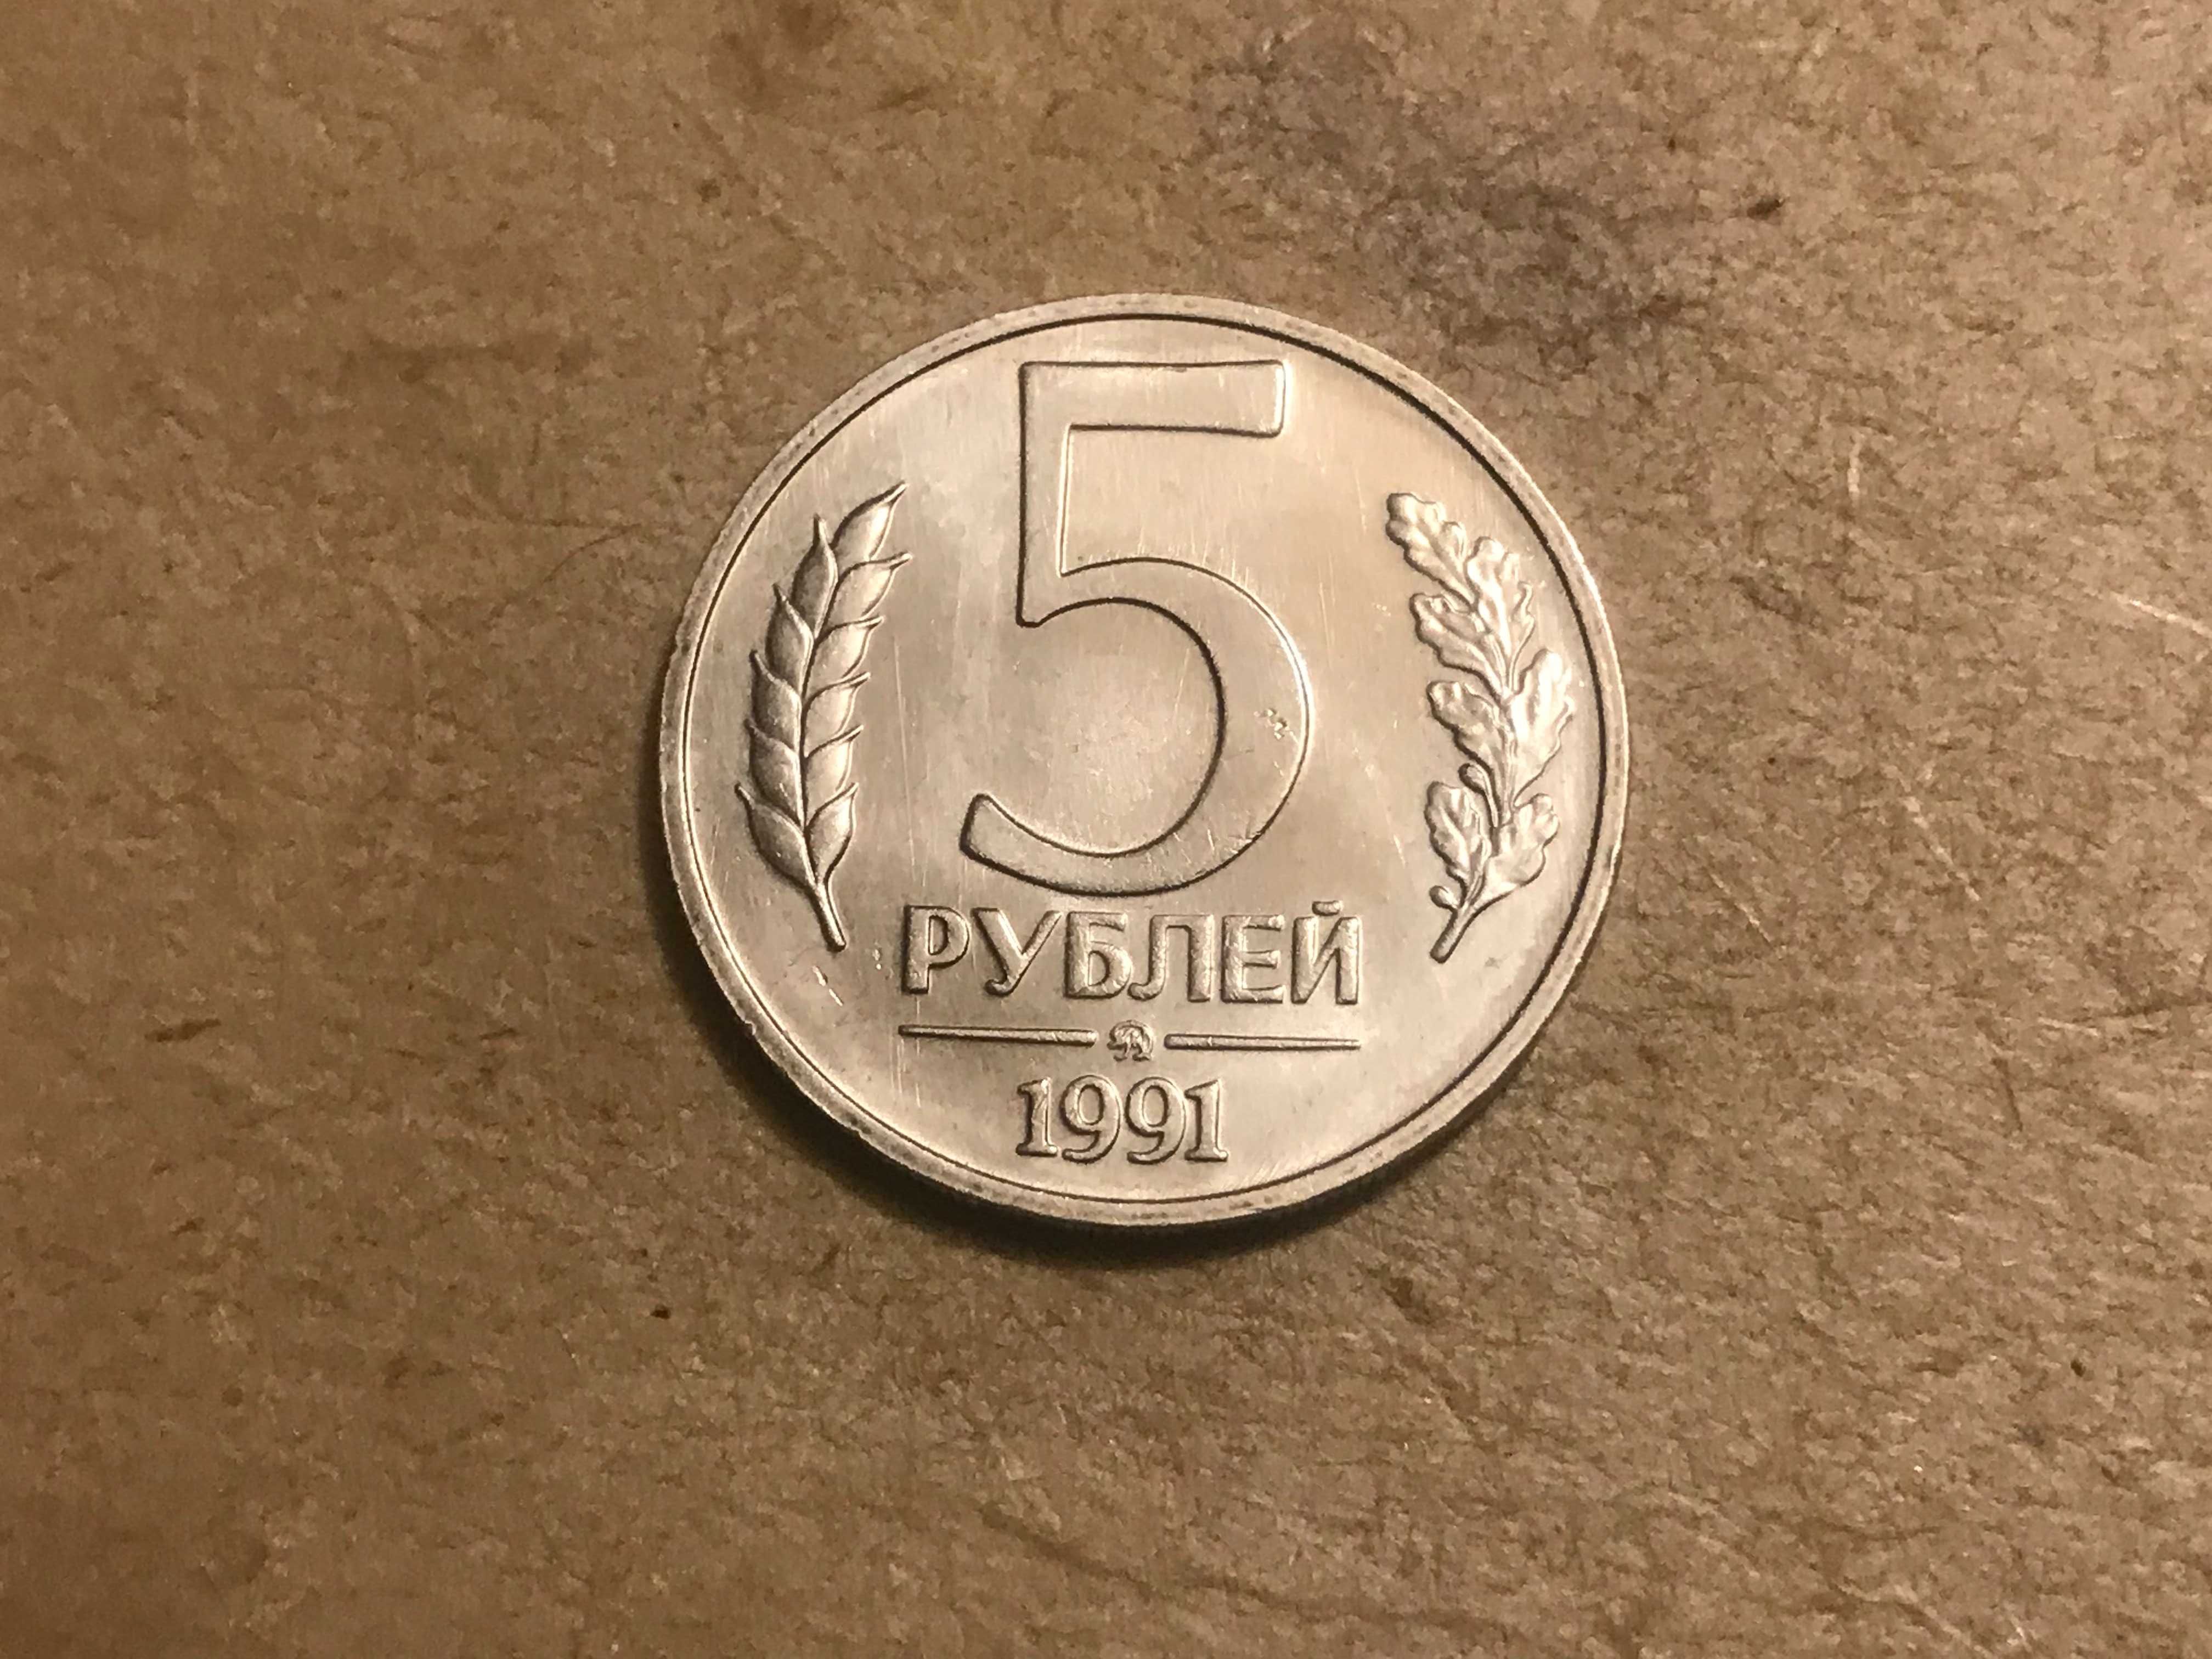 5 рублей 1991г.ммд / Мешковая / СССР.